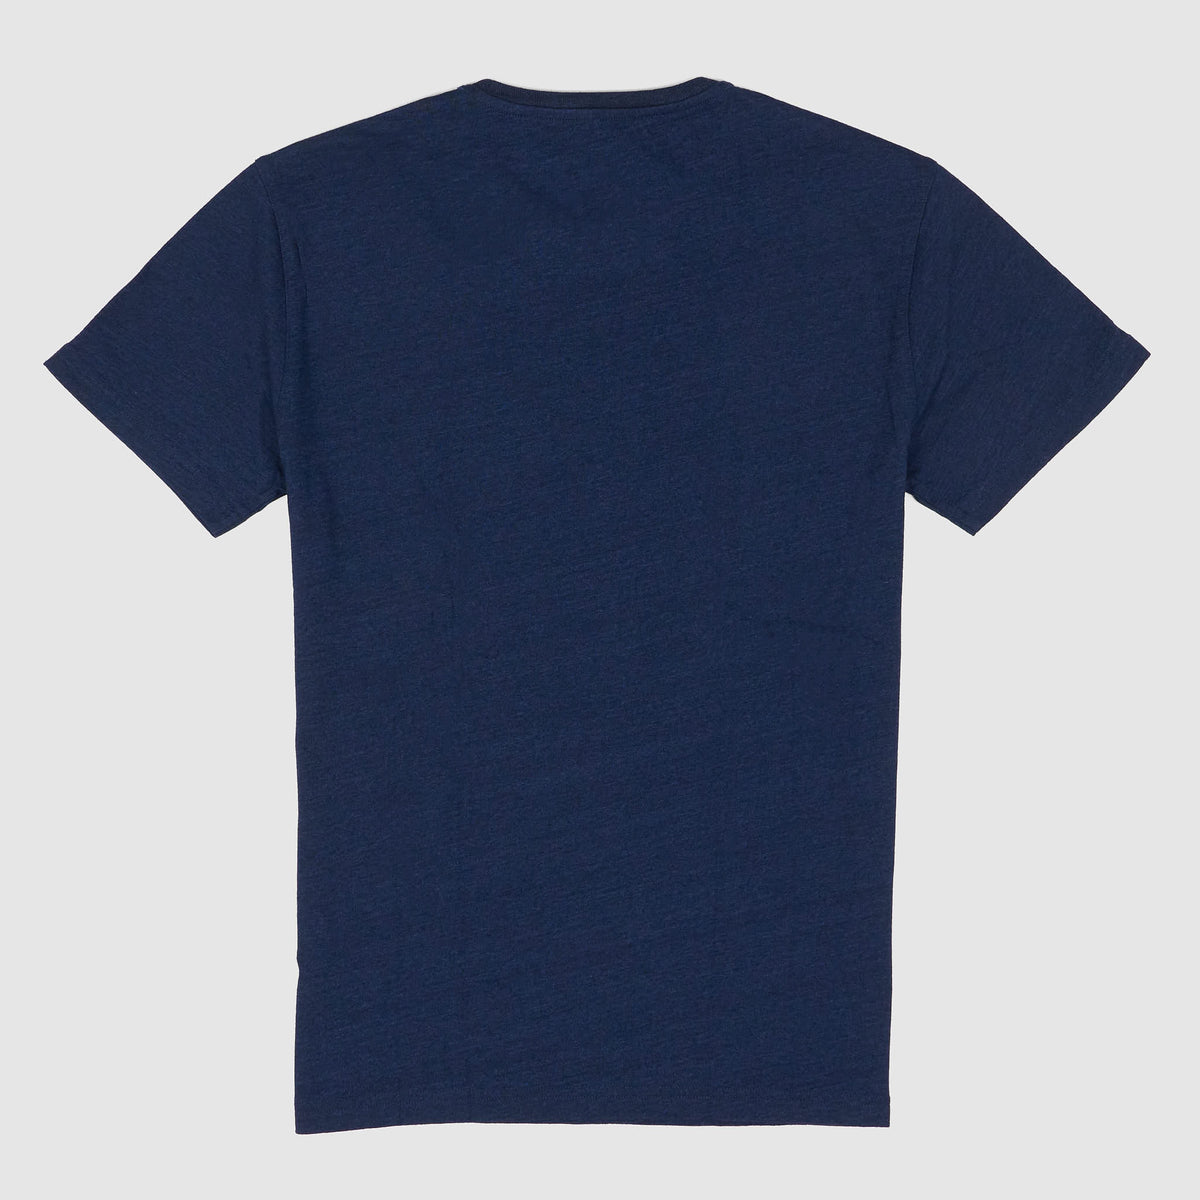 Bl&#39;ker Tee Short Sleeve Crew Neck Indigo Dyed Pocket T-Shirt